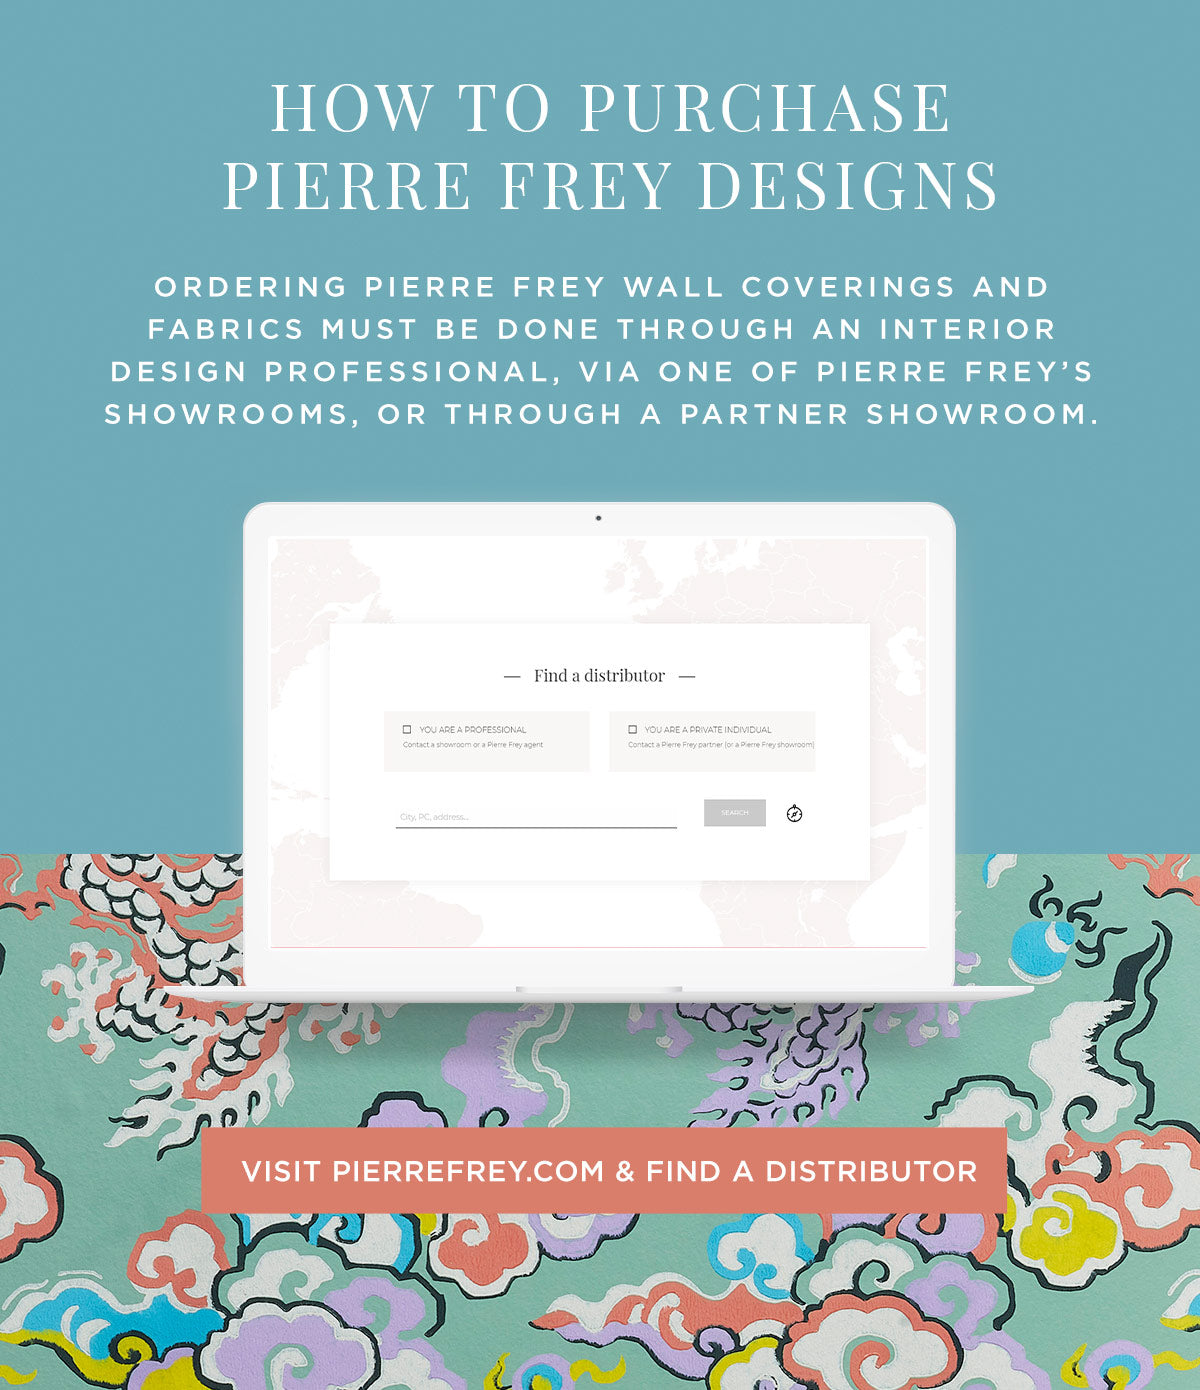 Visit PierreFrey.com to Find a Distributor